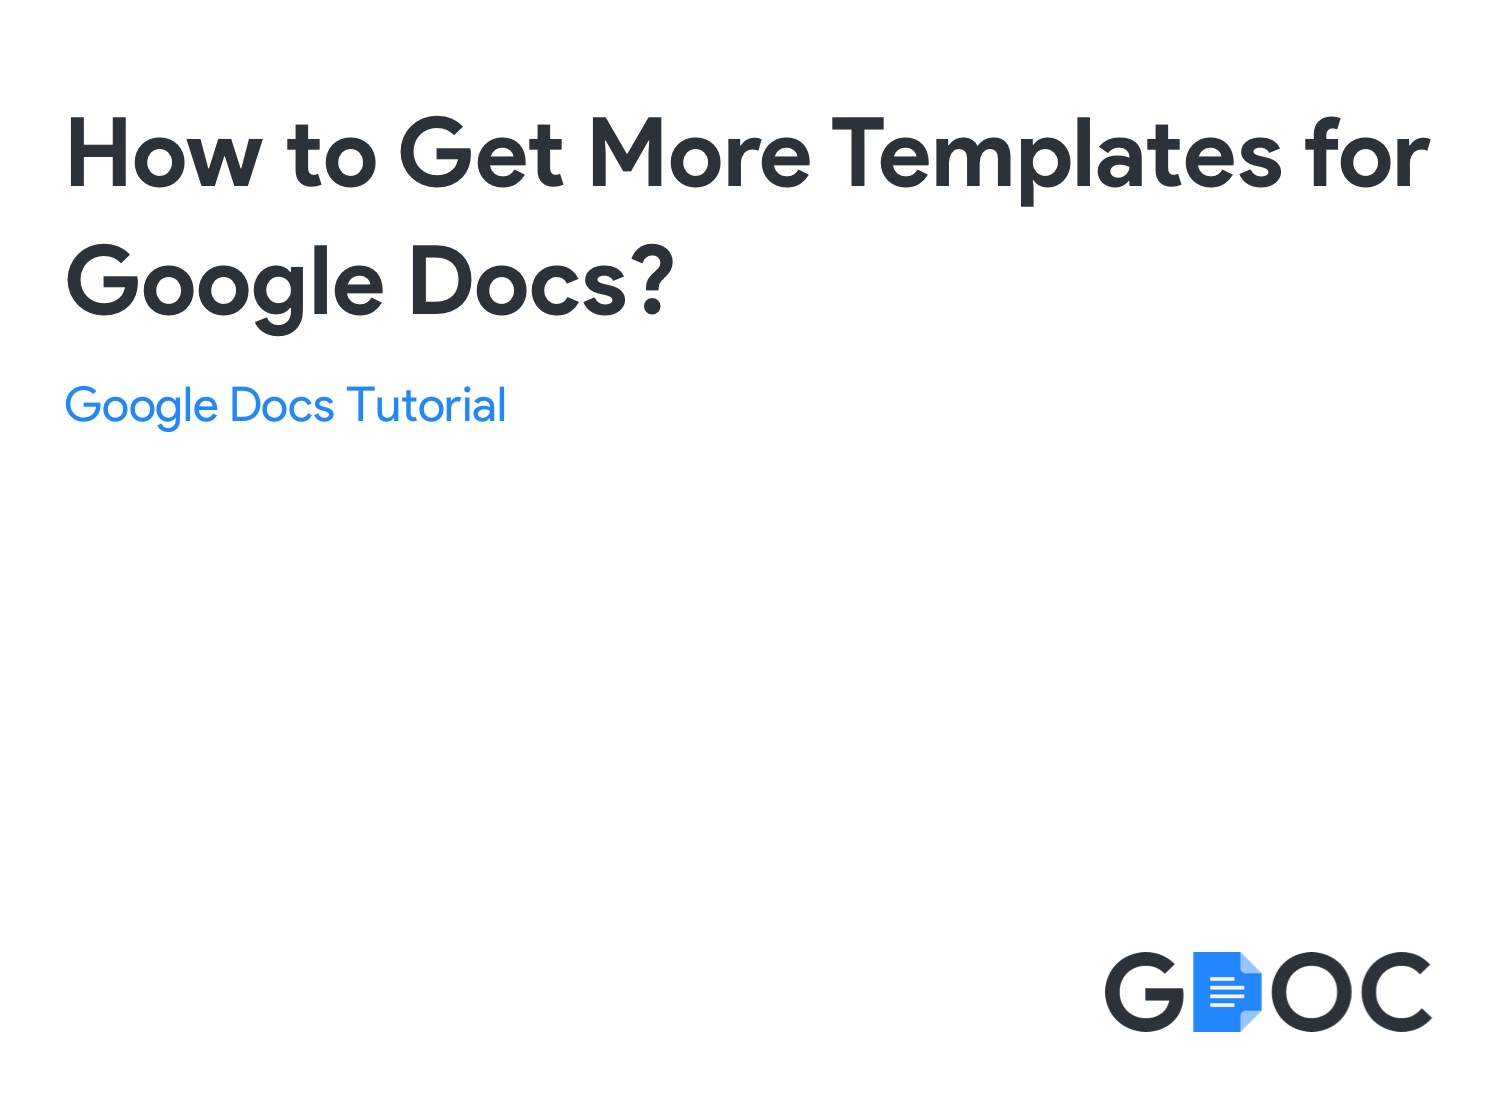 how-to-get-more-templates-for-google-docs-gdoc-io